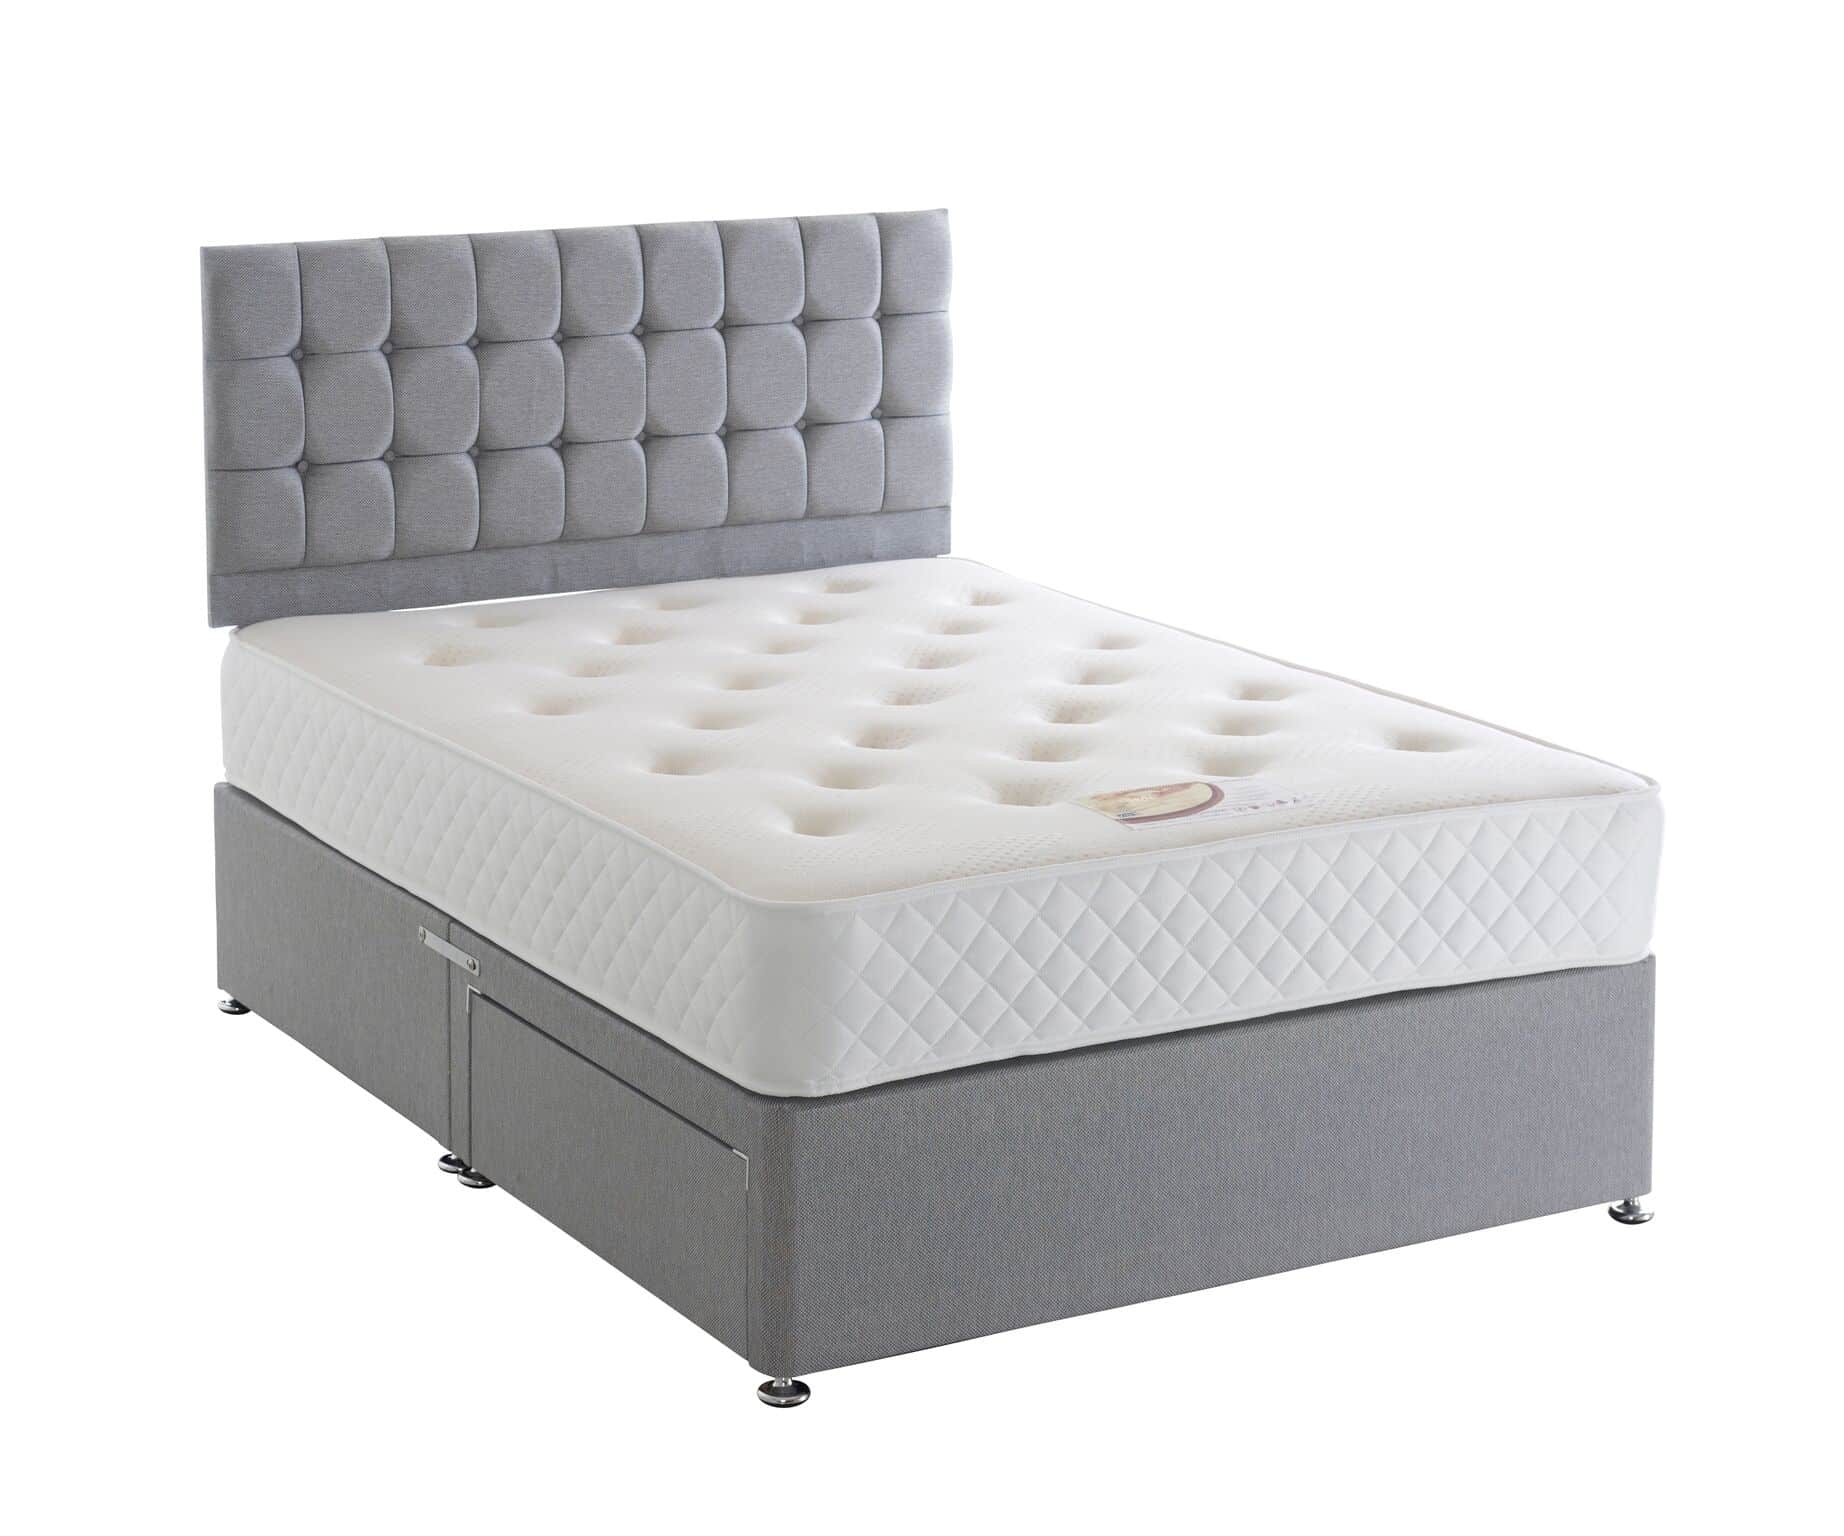 Dura Beds – Elastacoil Divan Bed Set – Double – Divan Bed Base With Elastacoil Medium Firmness Mattress